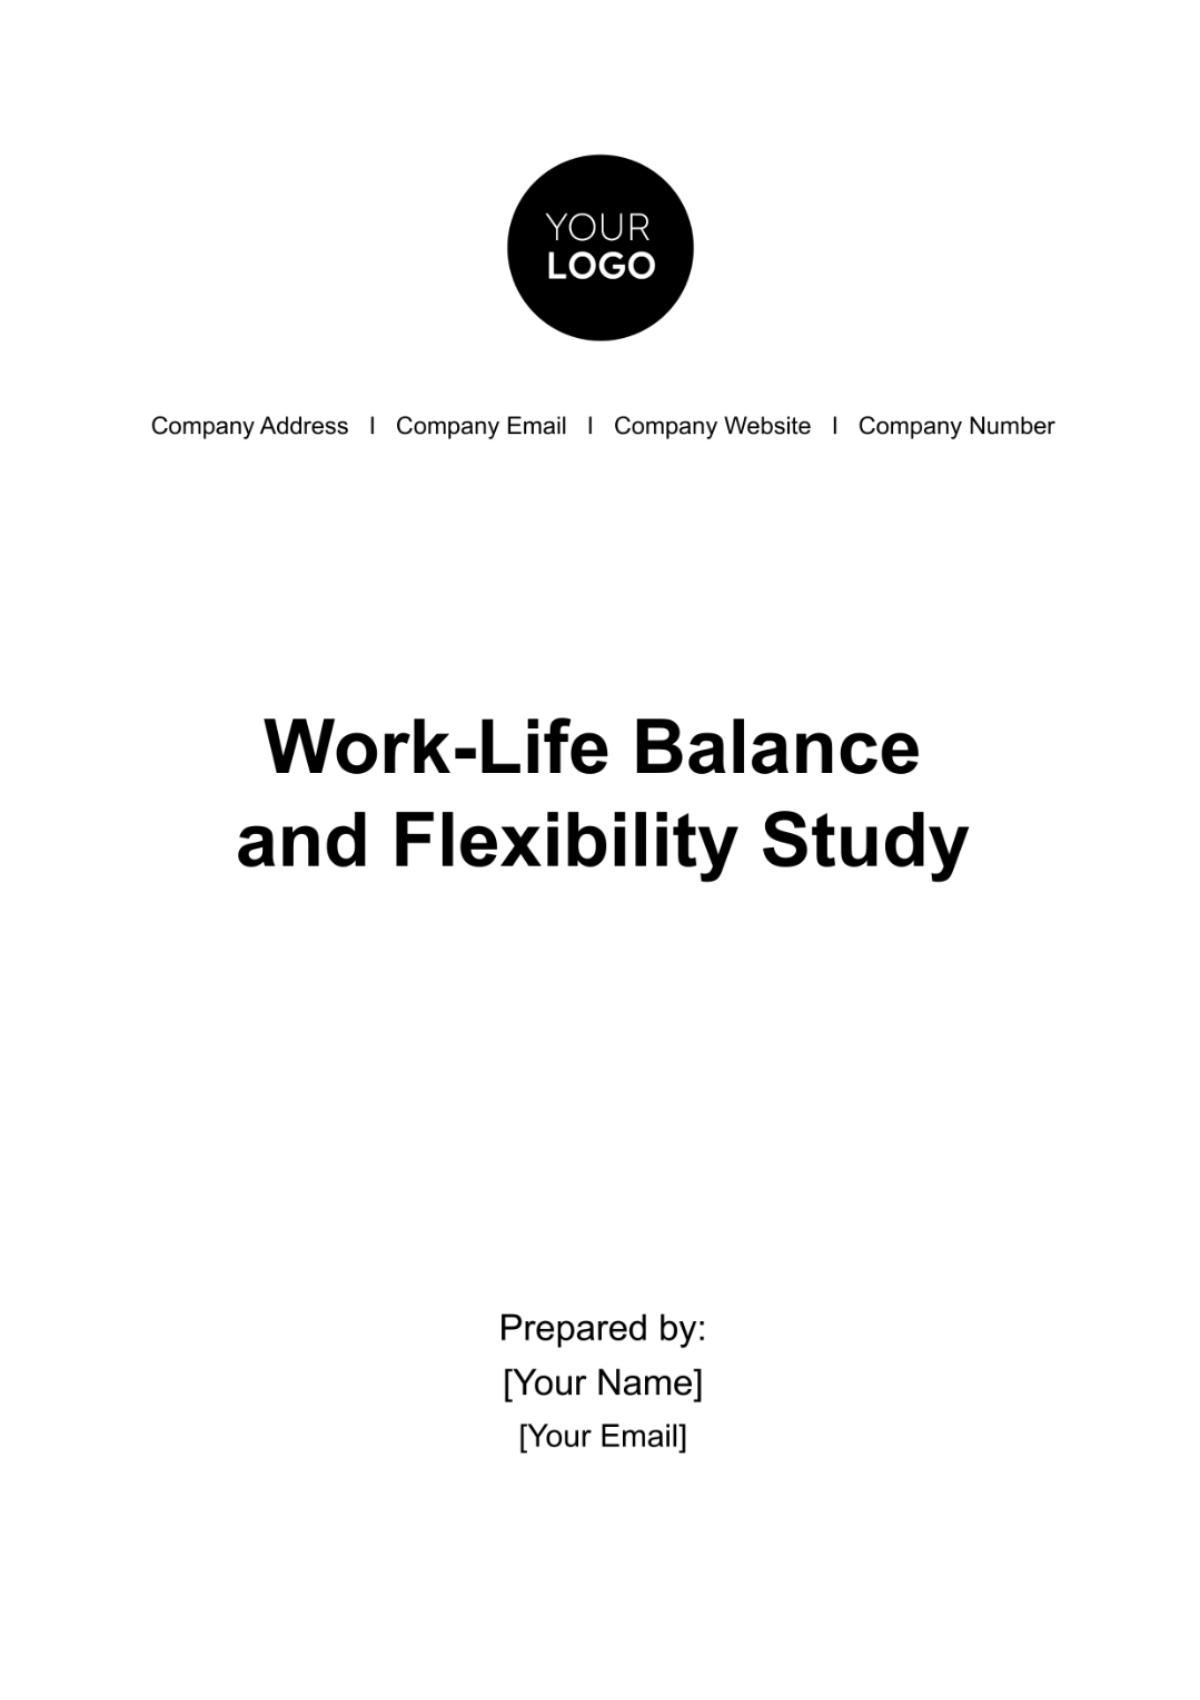 Work-life Balance and Flexibility Study HR Template